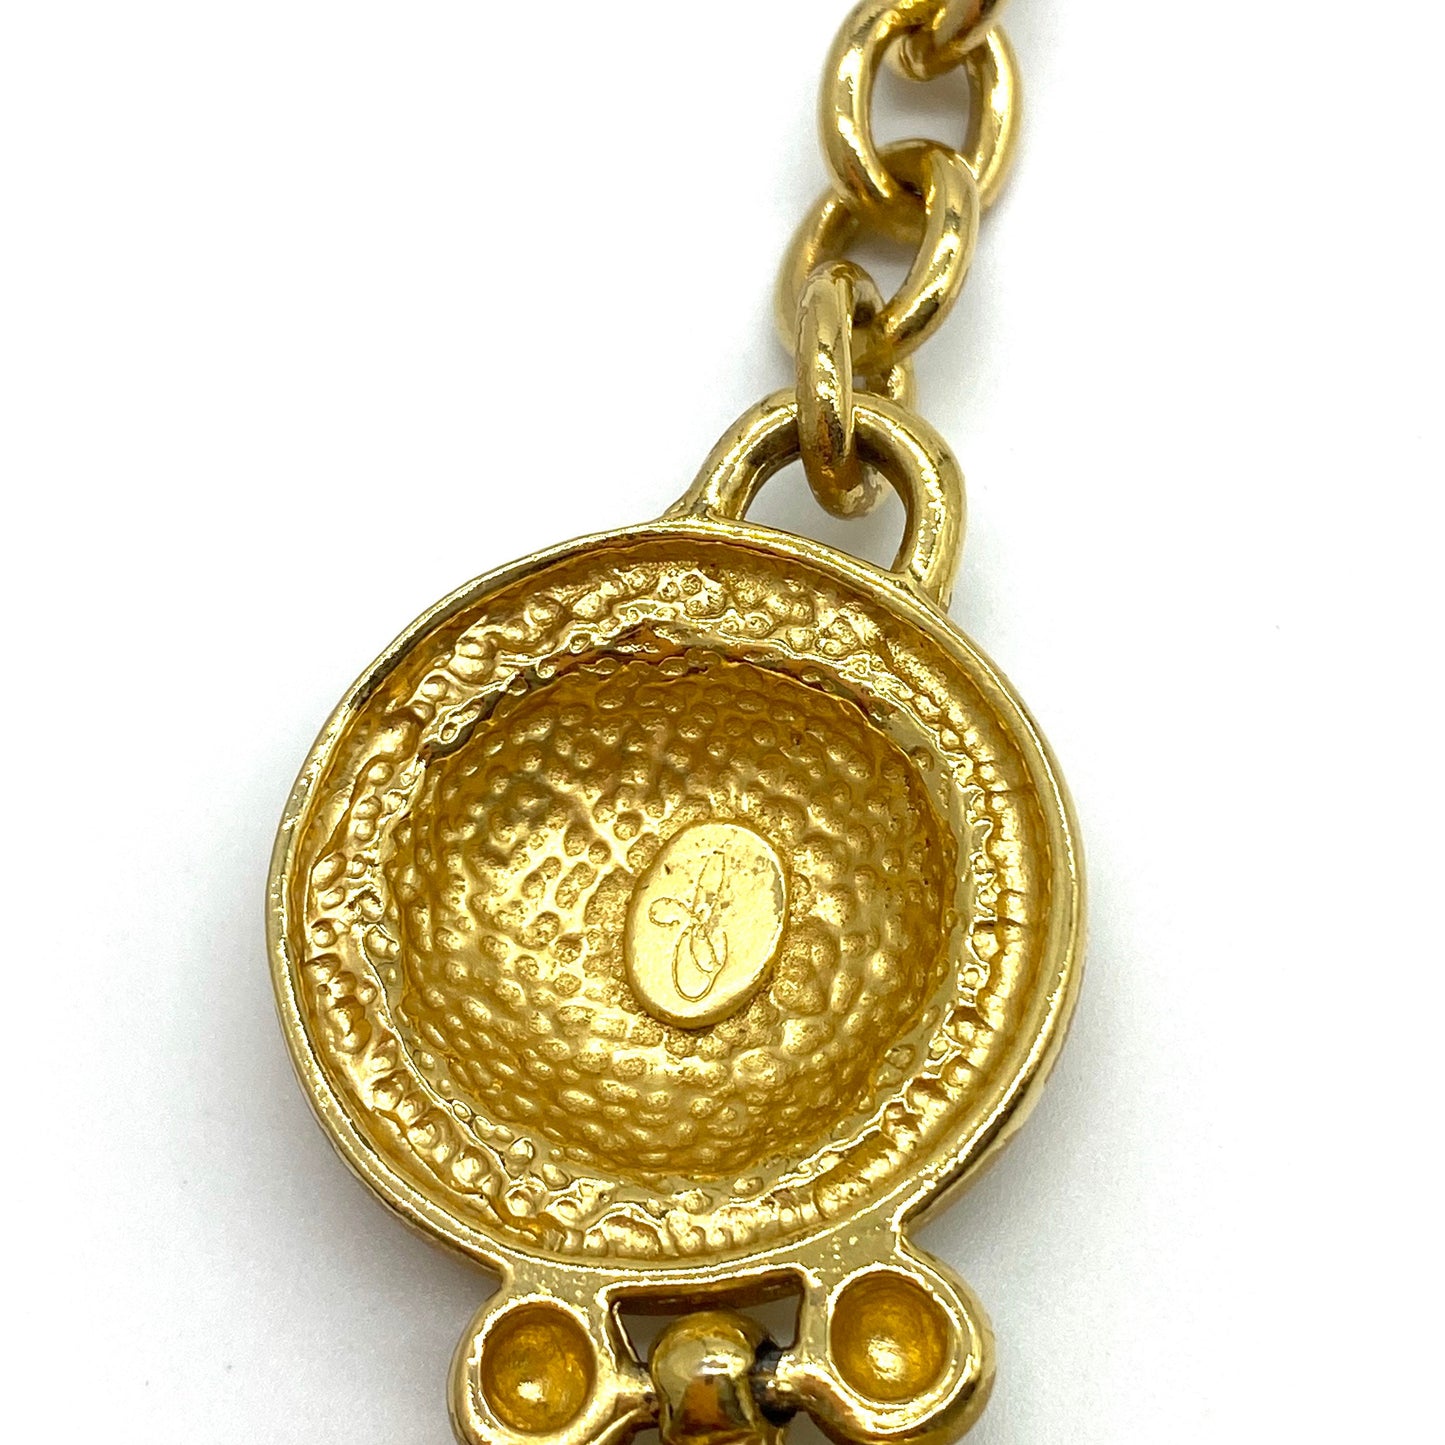 Joan Collins Signed Etruscan Revival Necklace